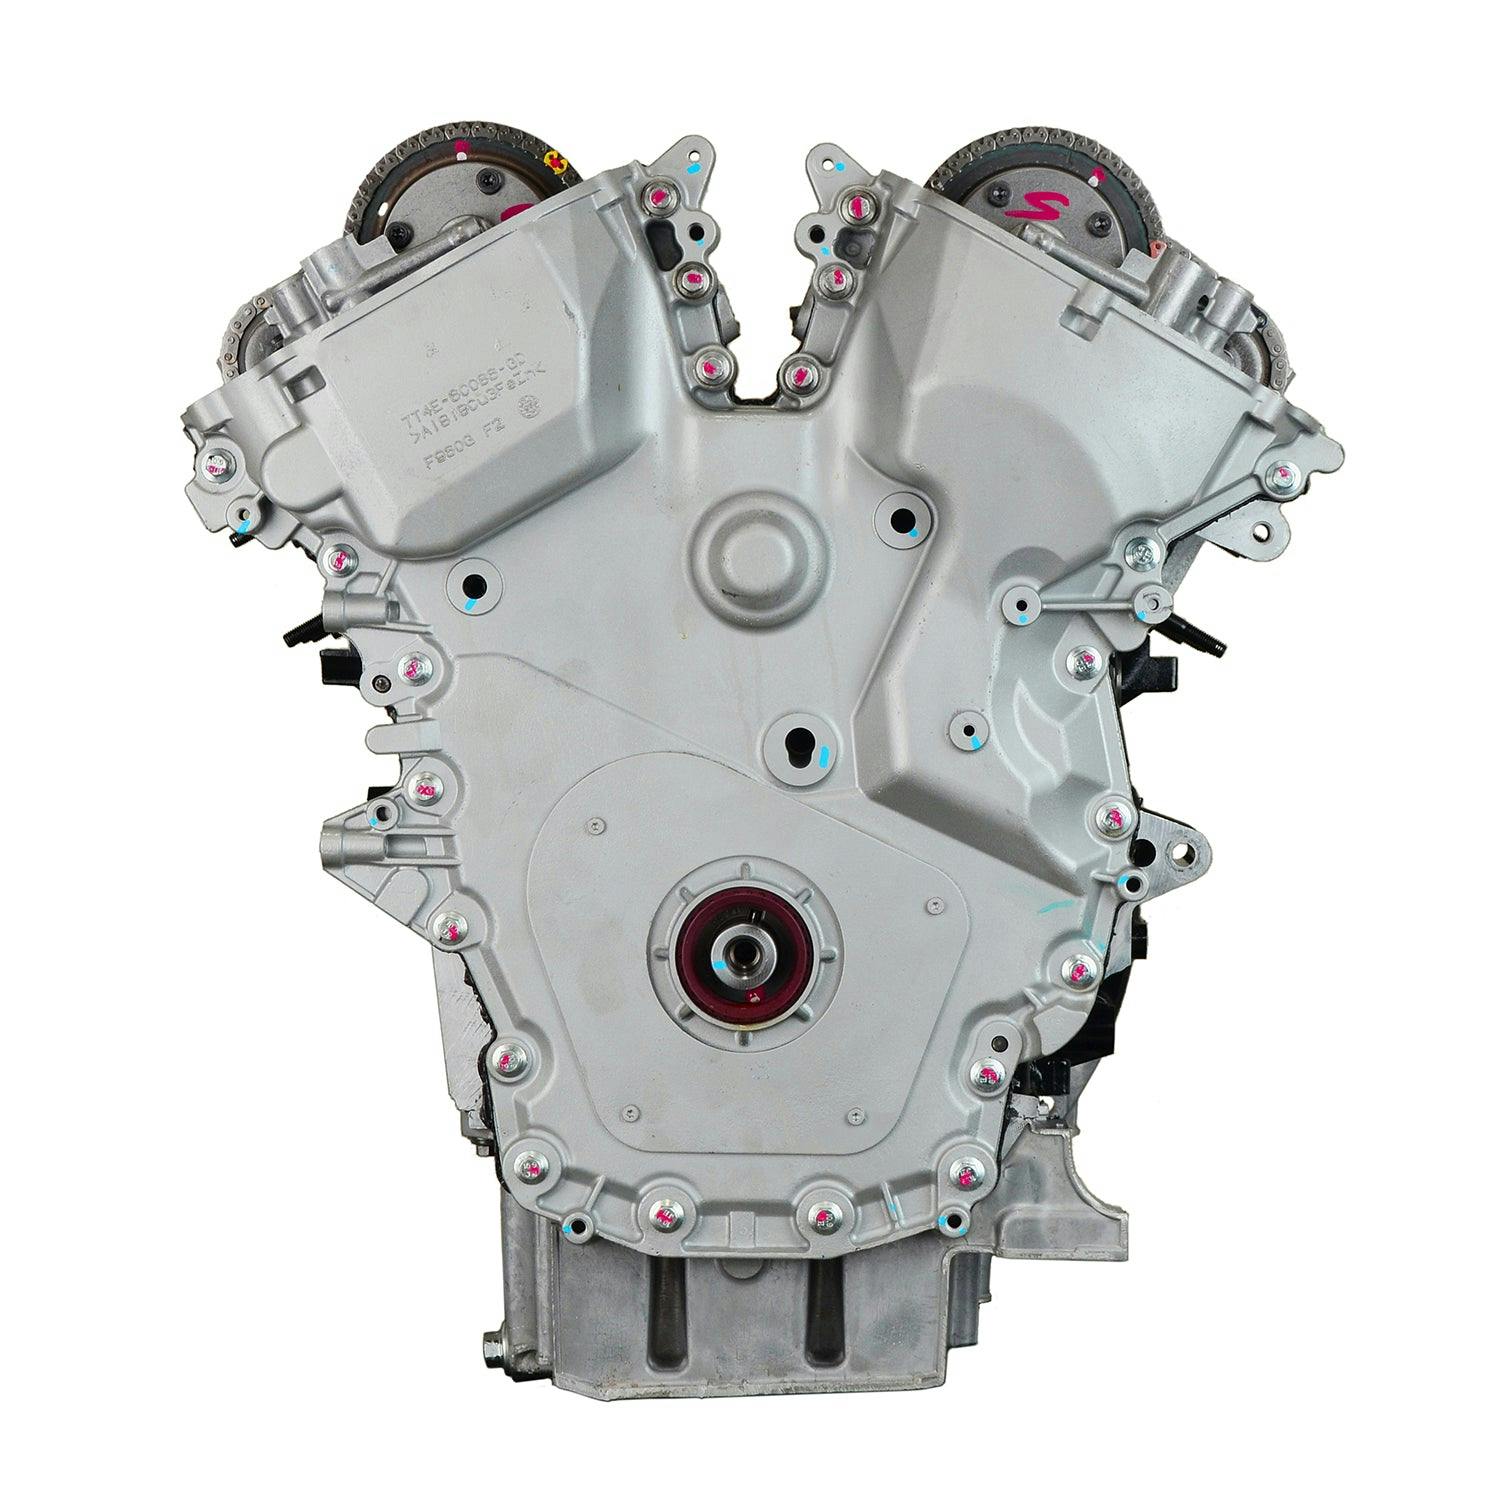 3.5L V6 Engine for 2010-2012 Ford Flex, Fusion, Taurus/Lincoln MKZ